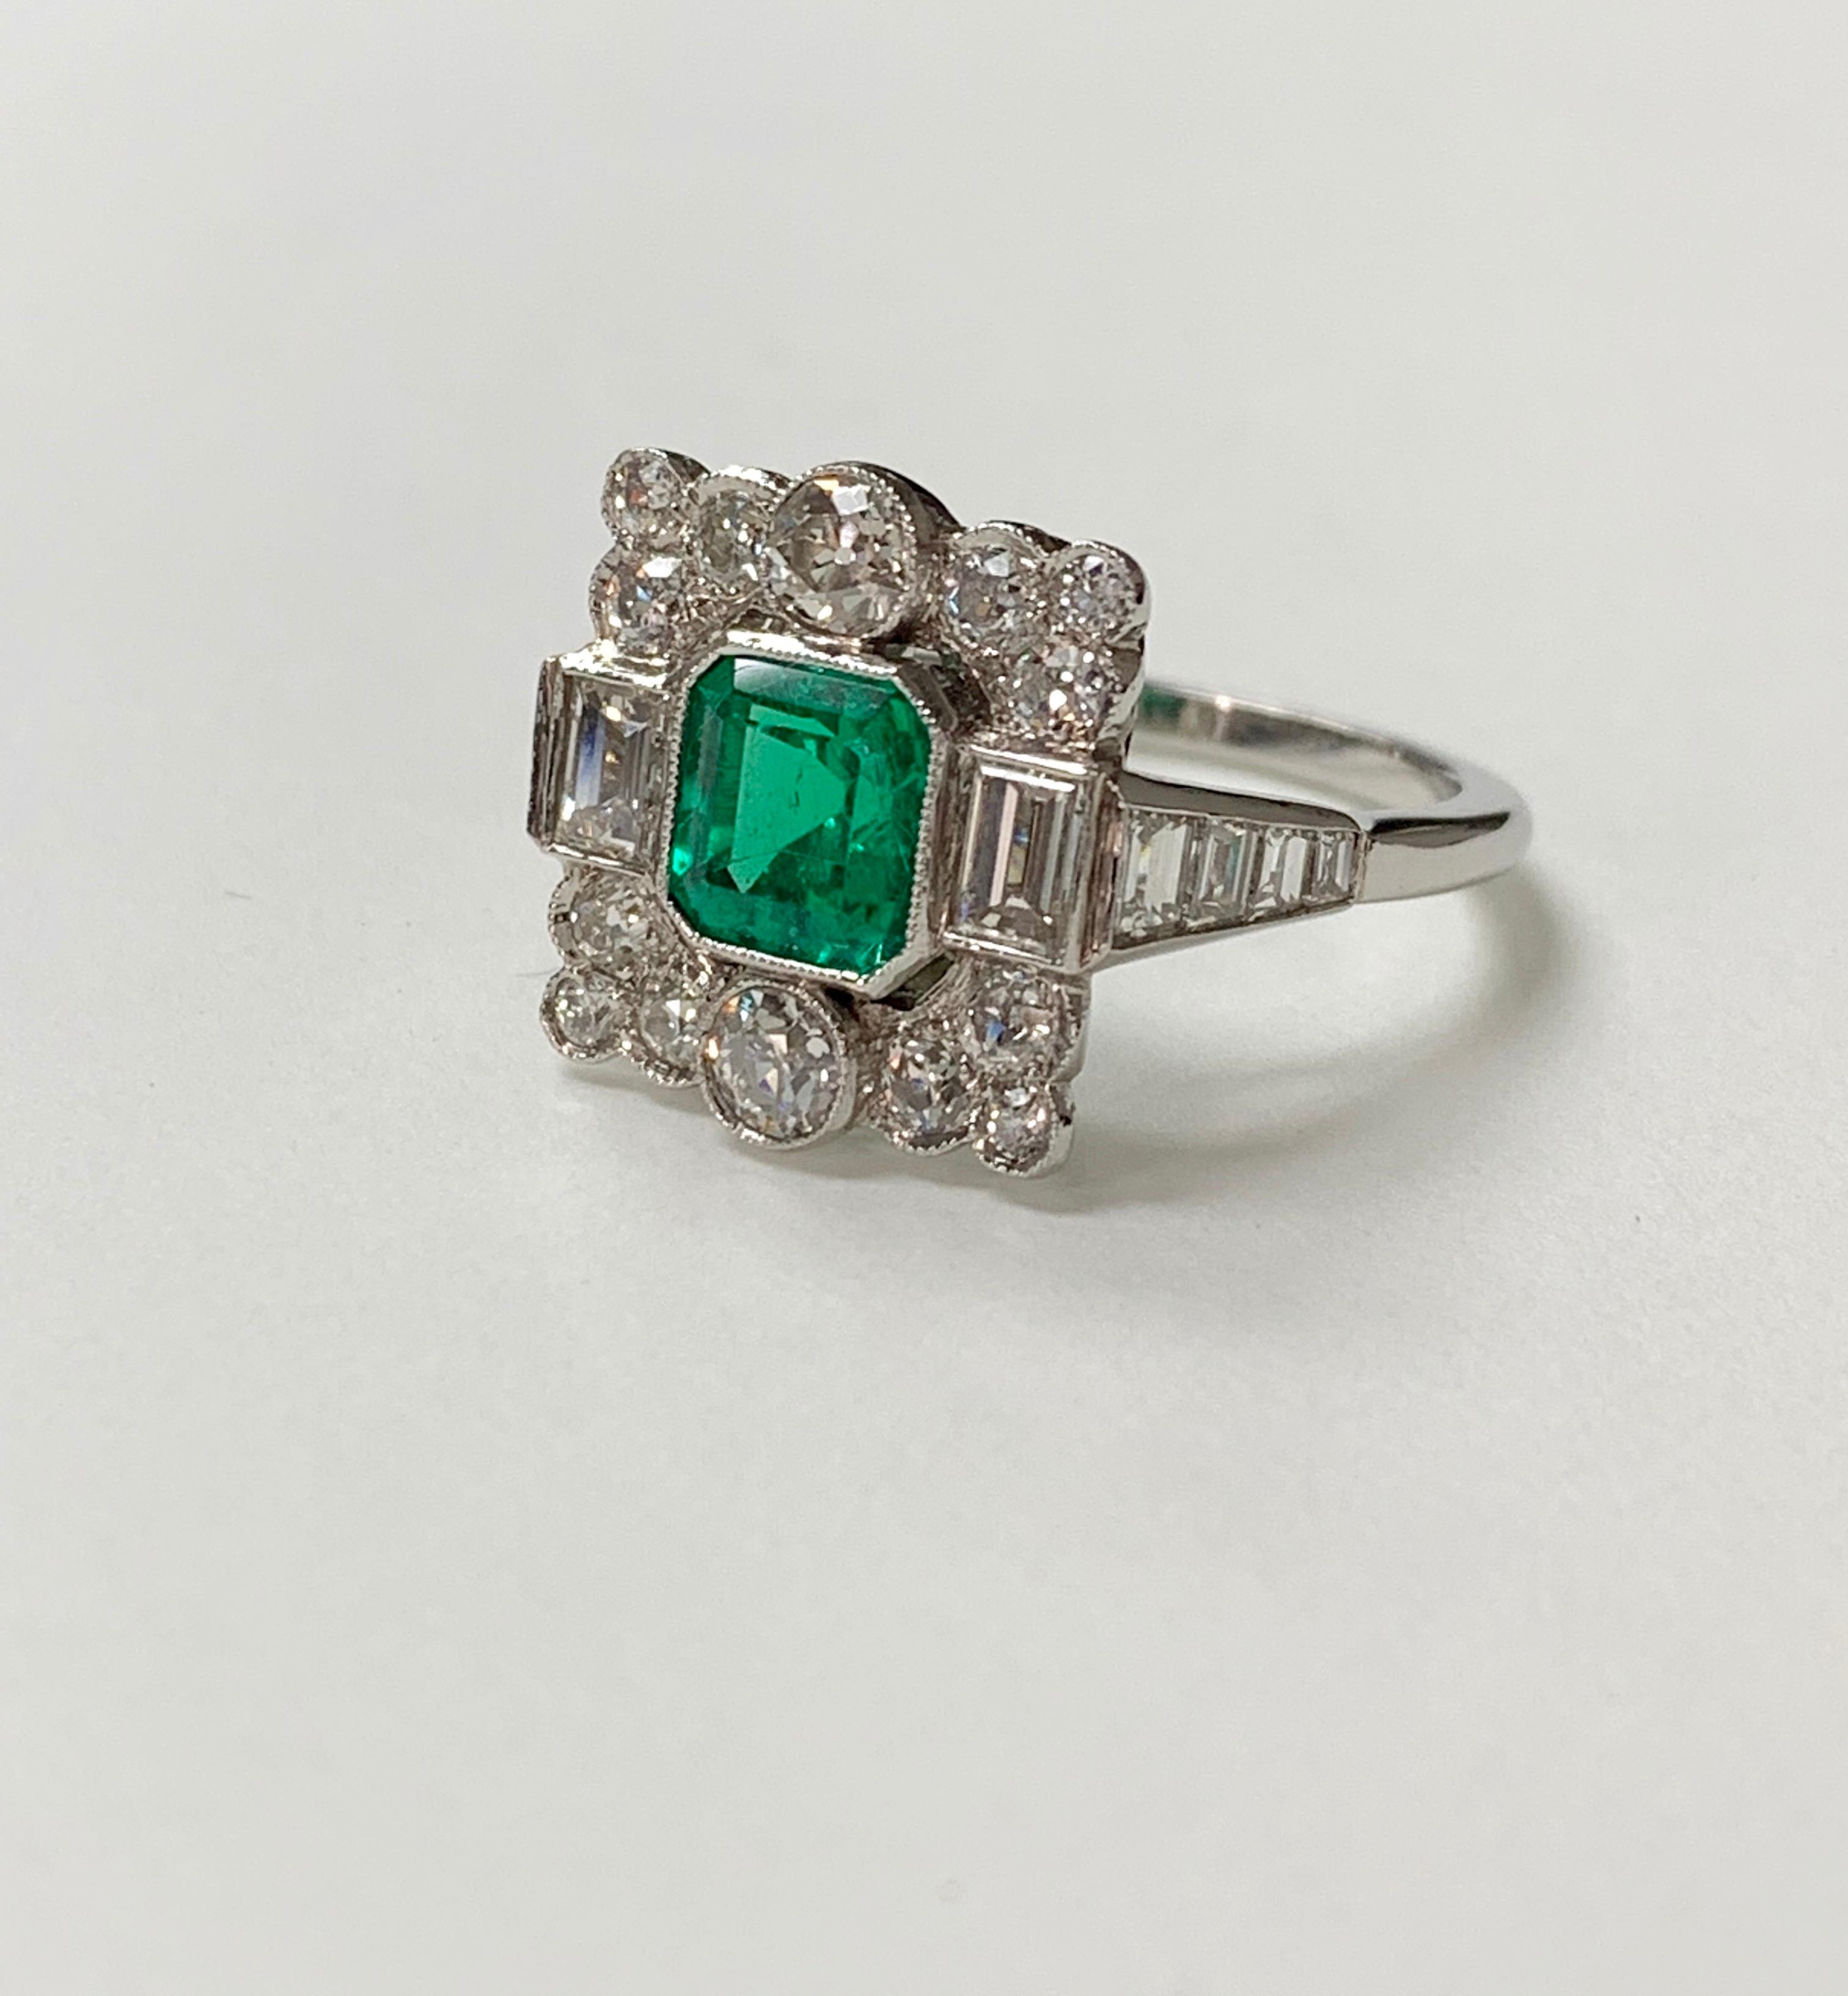 Emerald Cut Columbian Emerald and Diamond Engagement Ring in Platinum